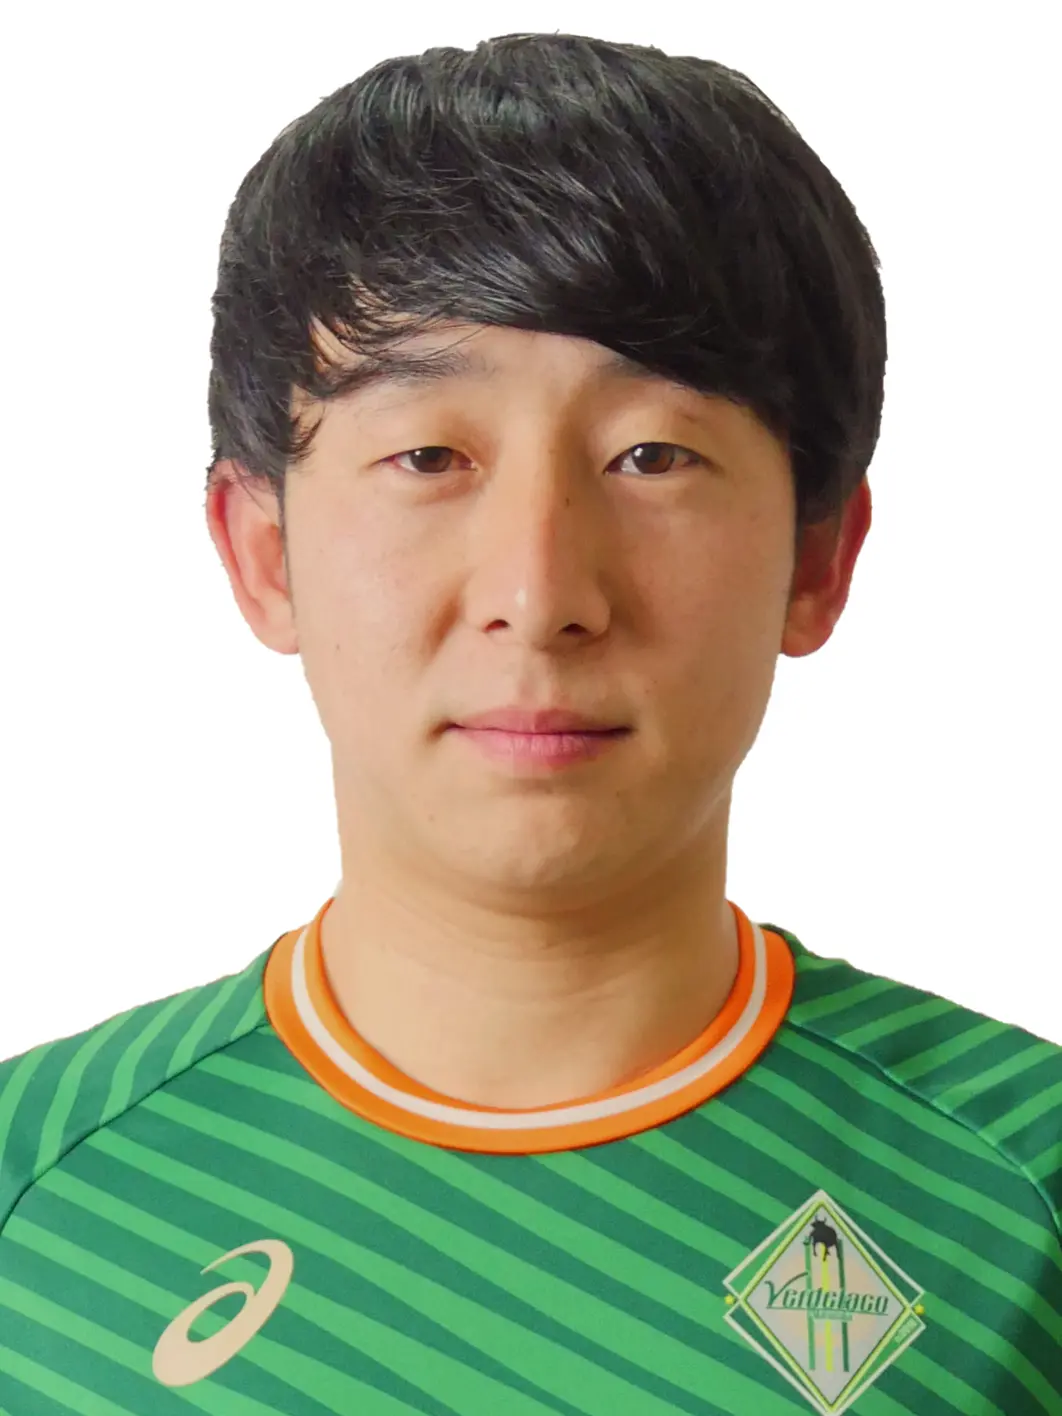 古屋颯斗選手の顔写真